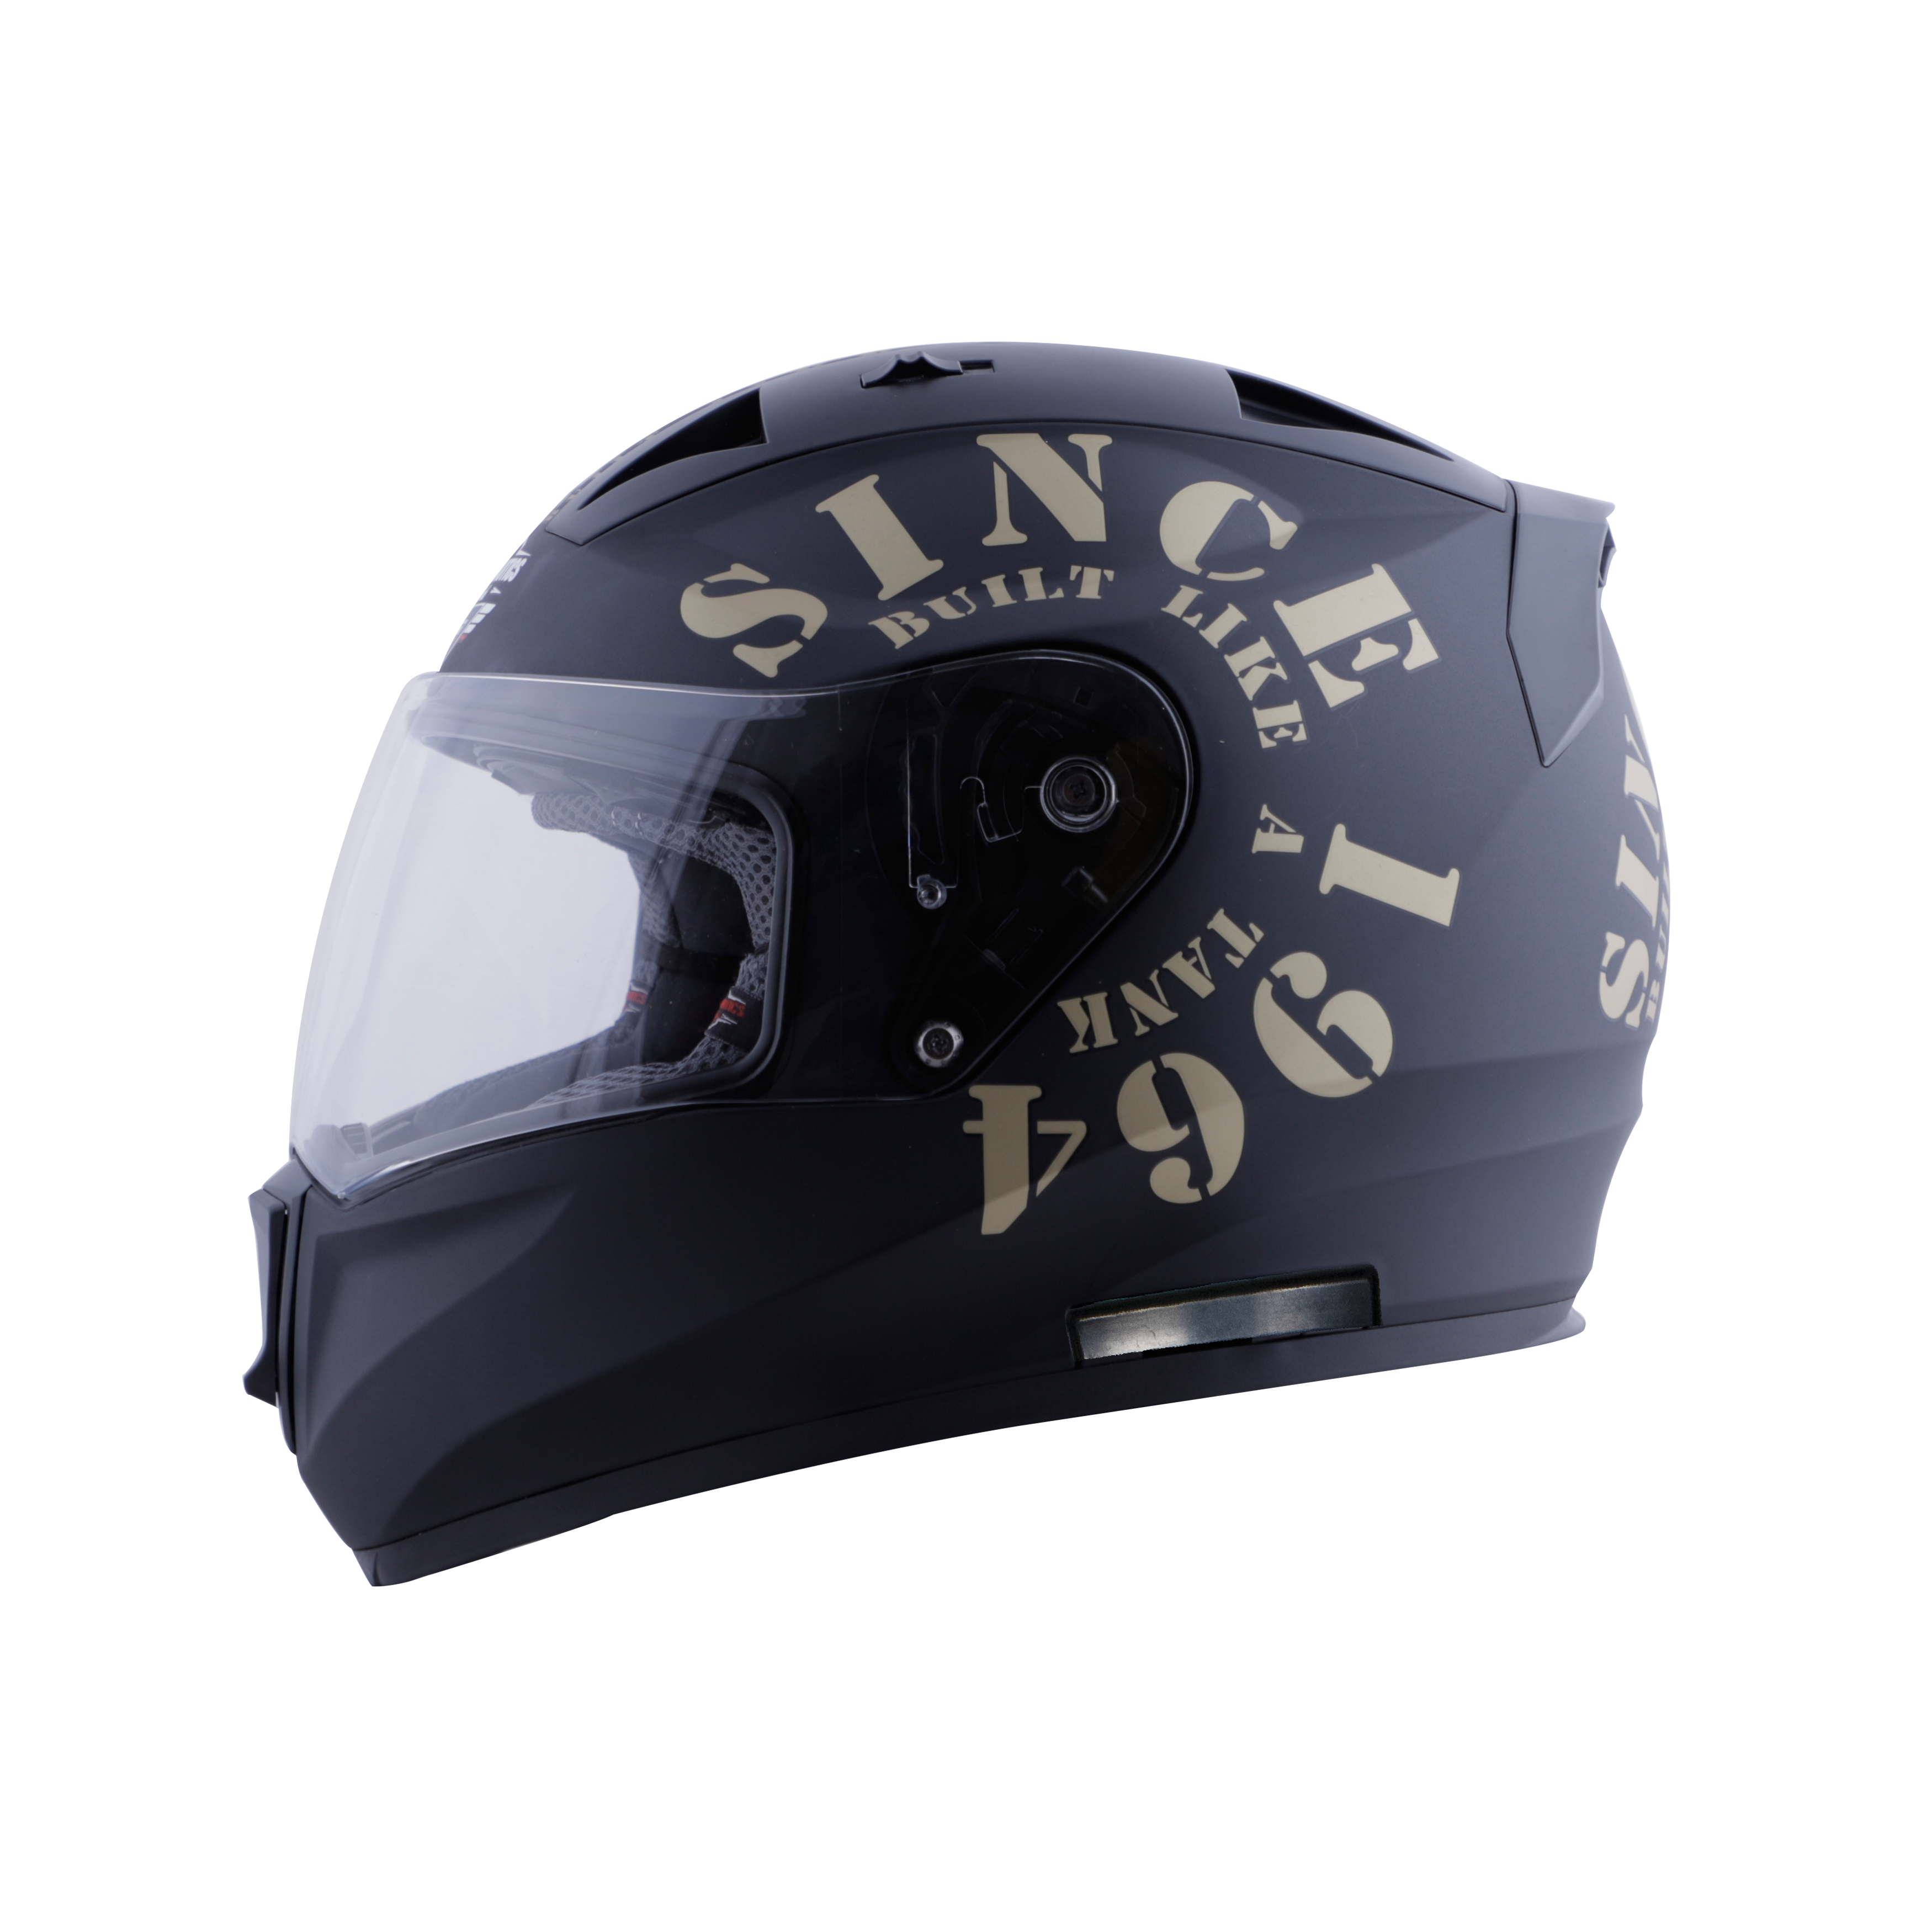 Steelbird SA-1 Aeronautics Tank Full Face ISI Certified Helmet (Matt Black Gold With Clear Visor)